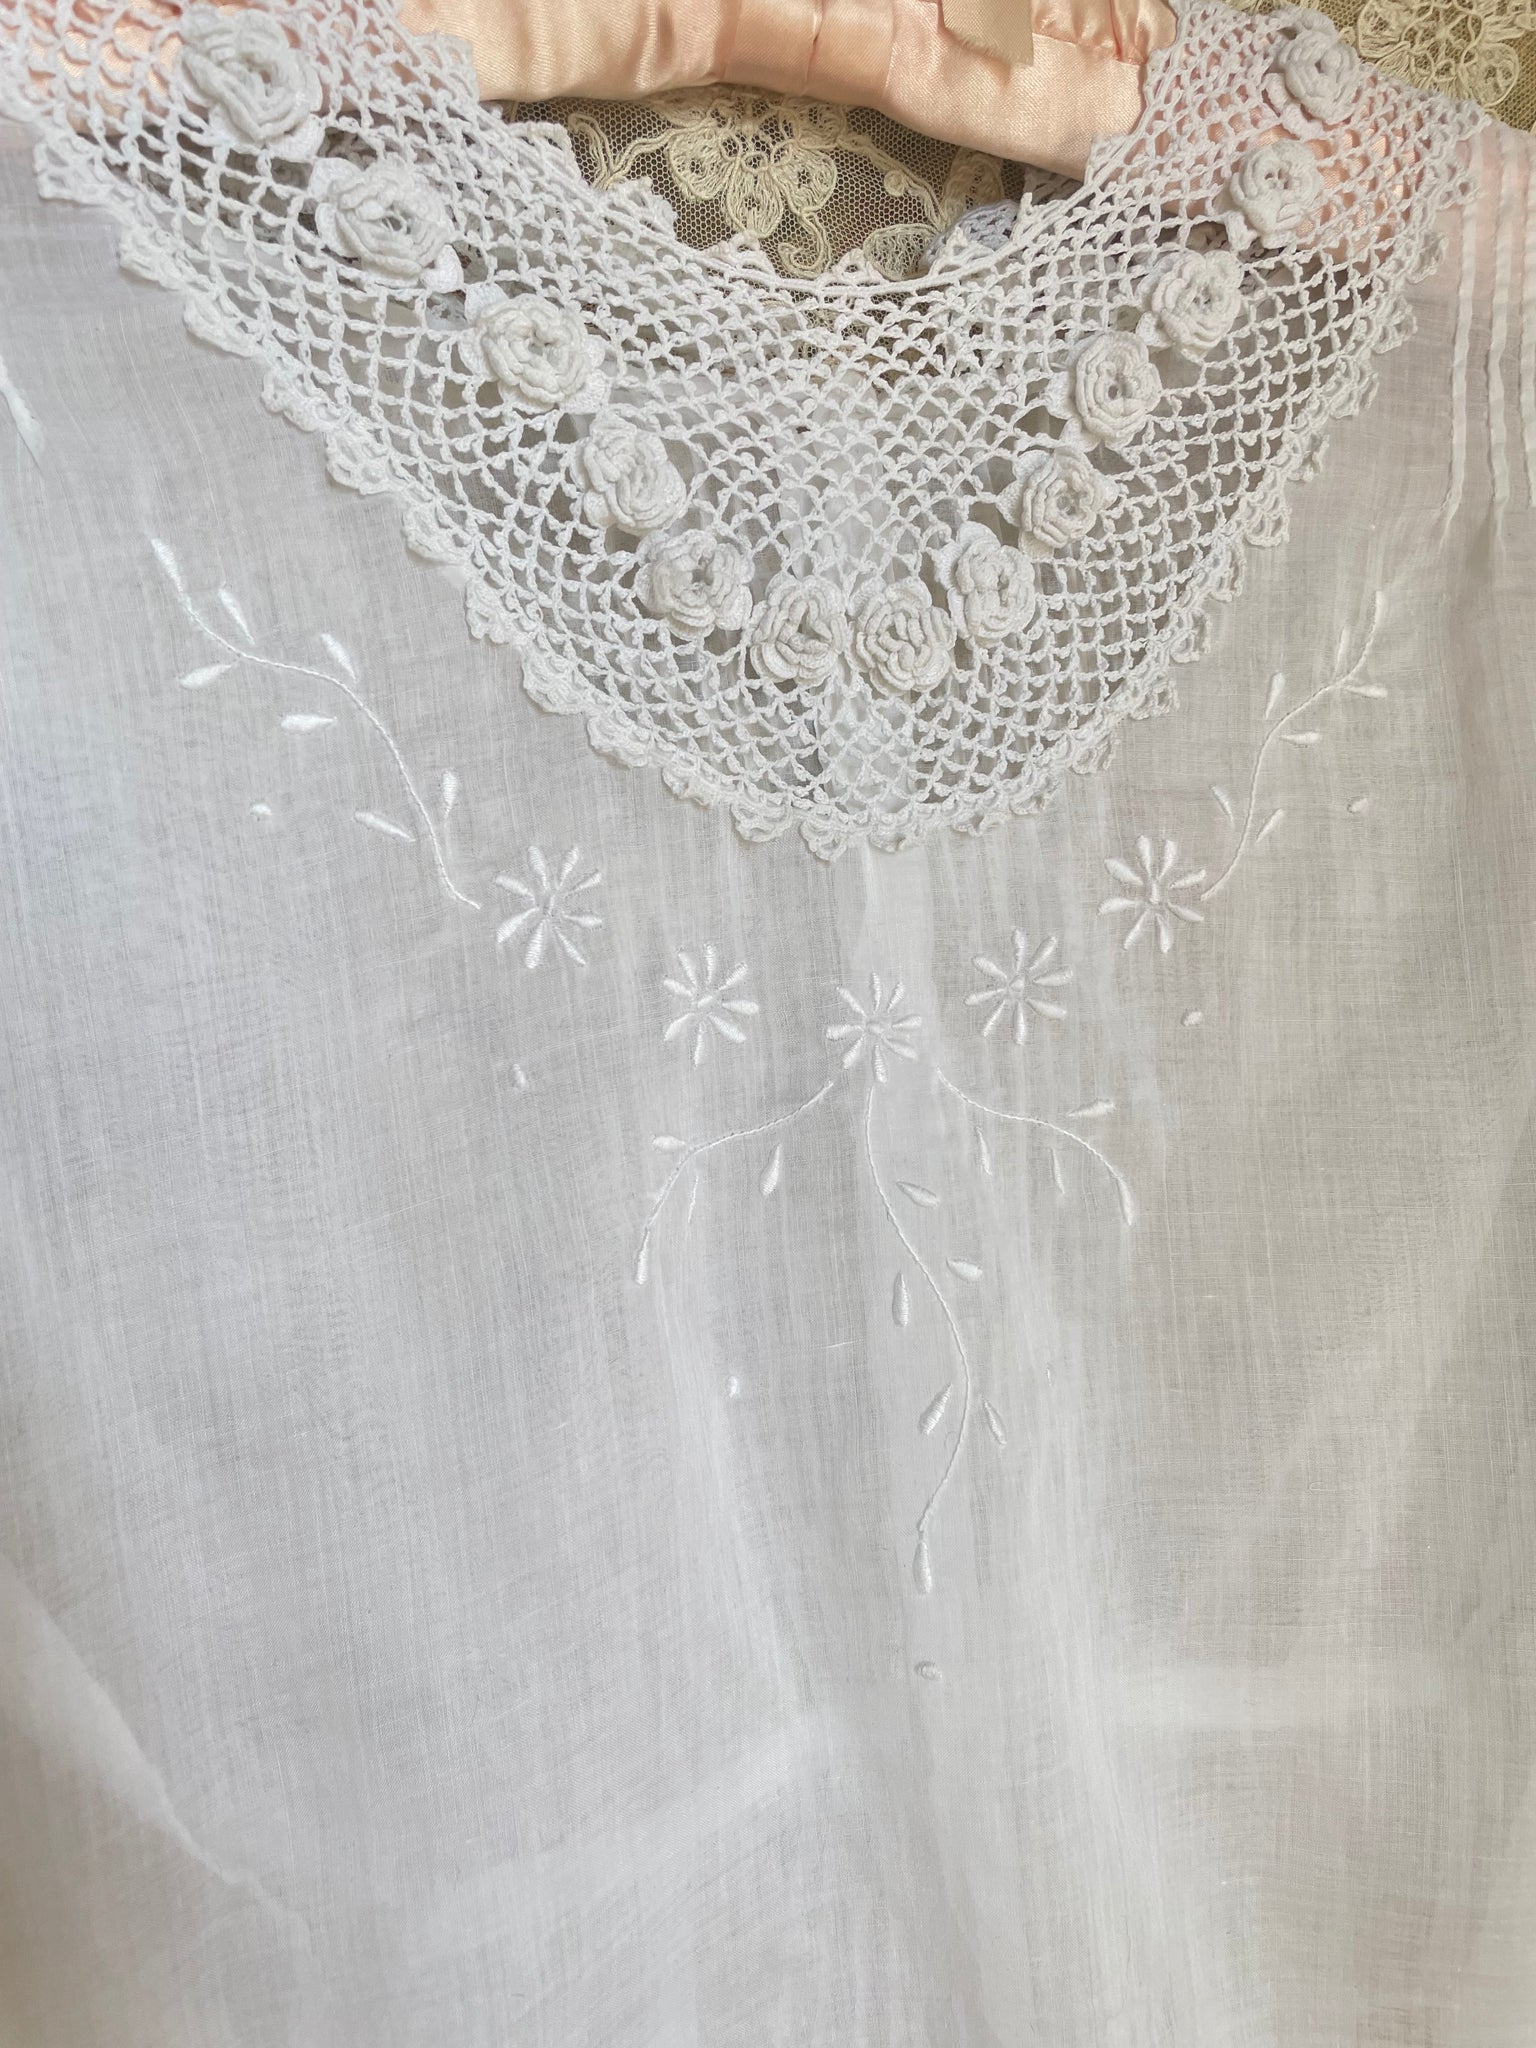 Eyelet Embroidered White Cotton Fabric Trim circa 1900